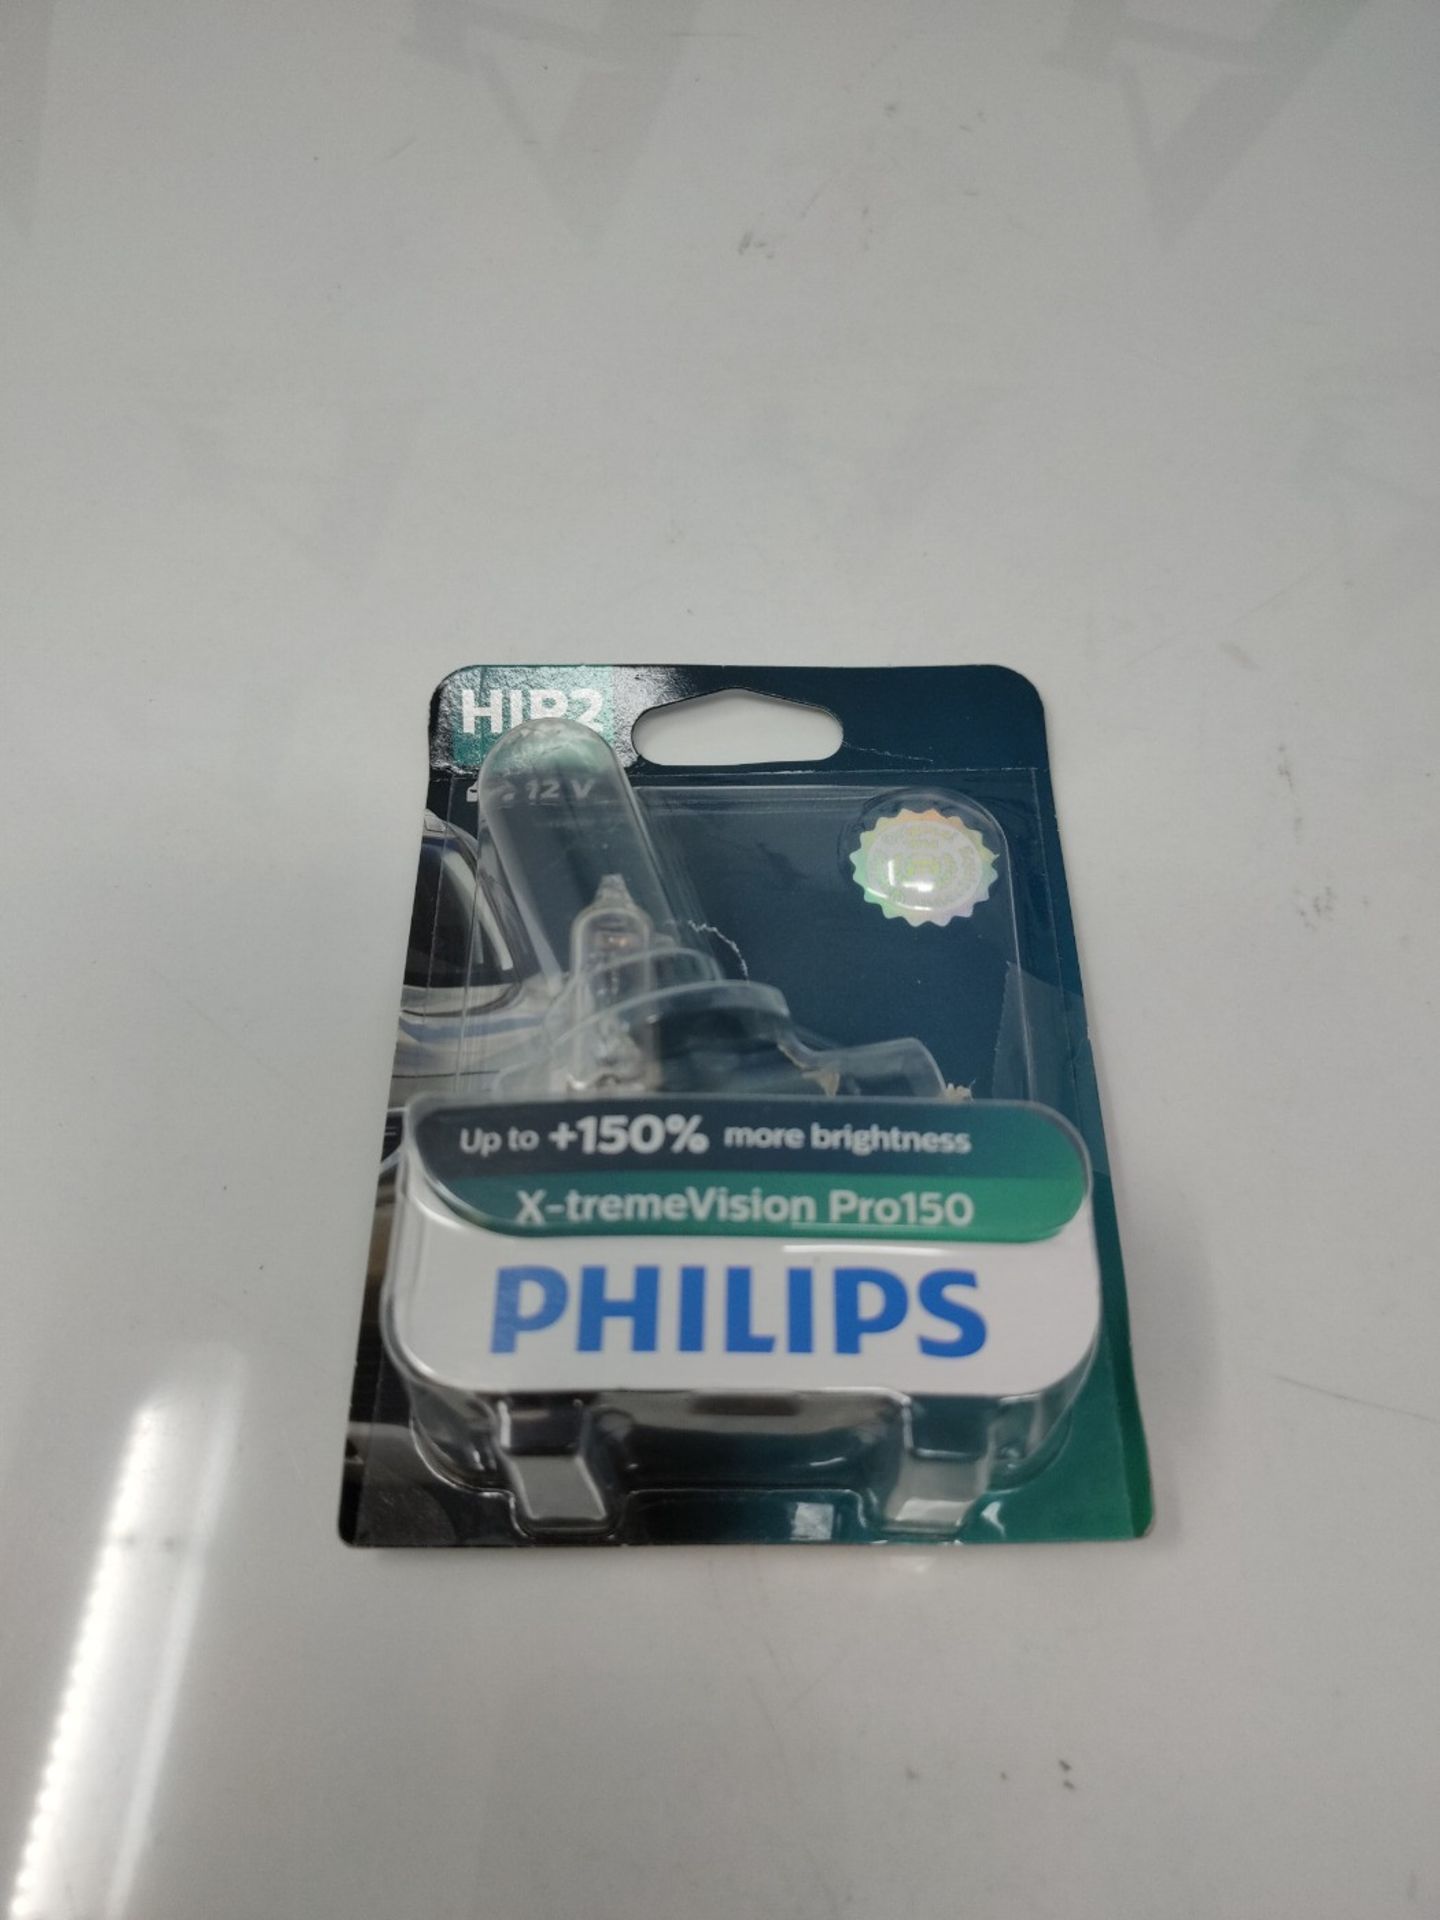 Philips X-tremeVision Pro150 HIR2 car headlight bulb +150%, single blister - Bild 2 aus 3